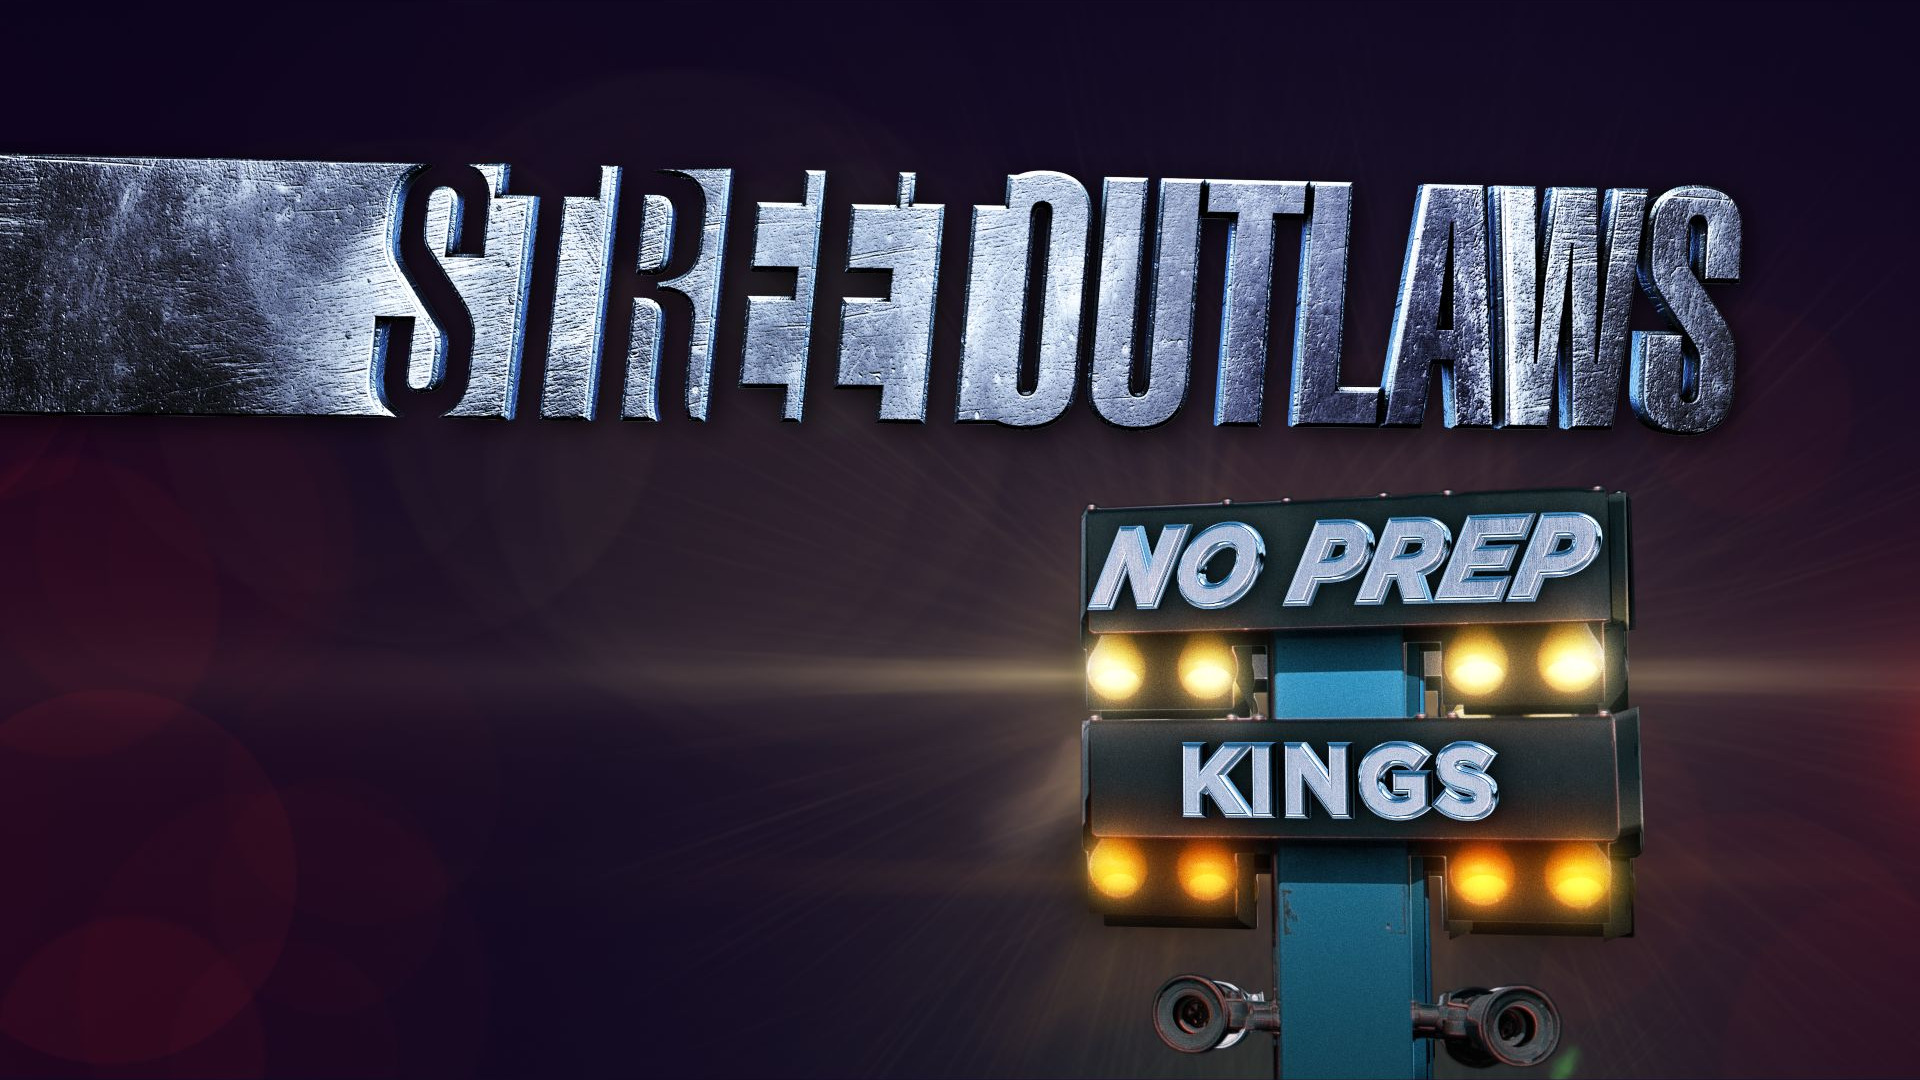 Show Street Outlaws: No Prep Kings